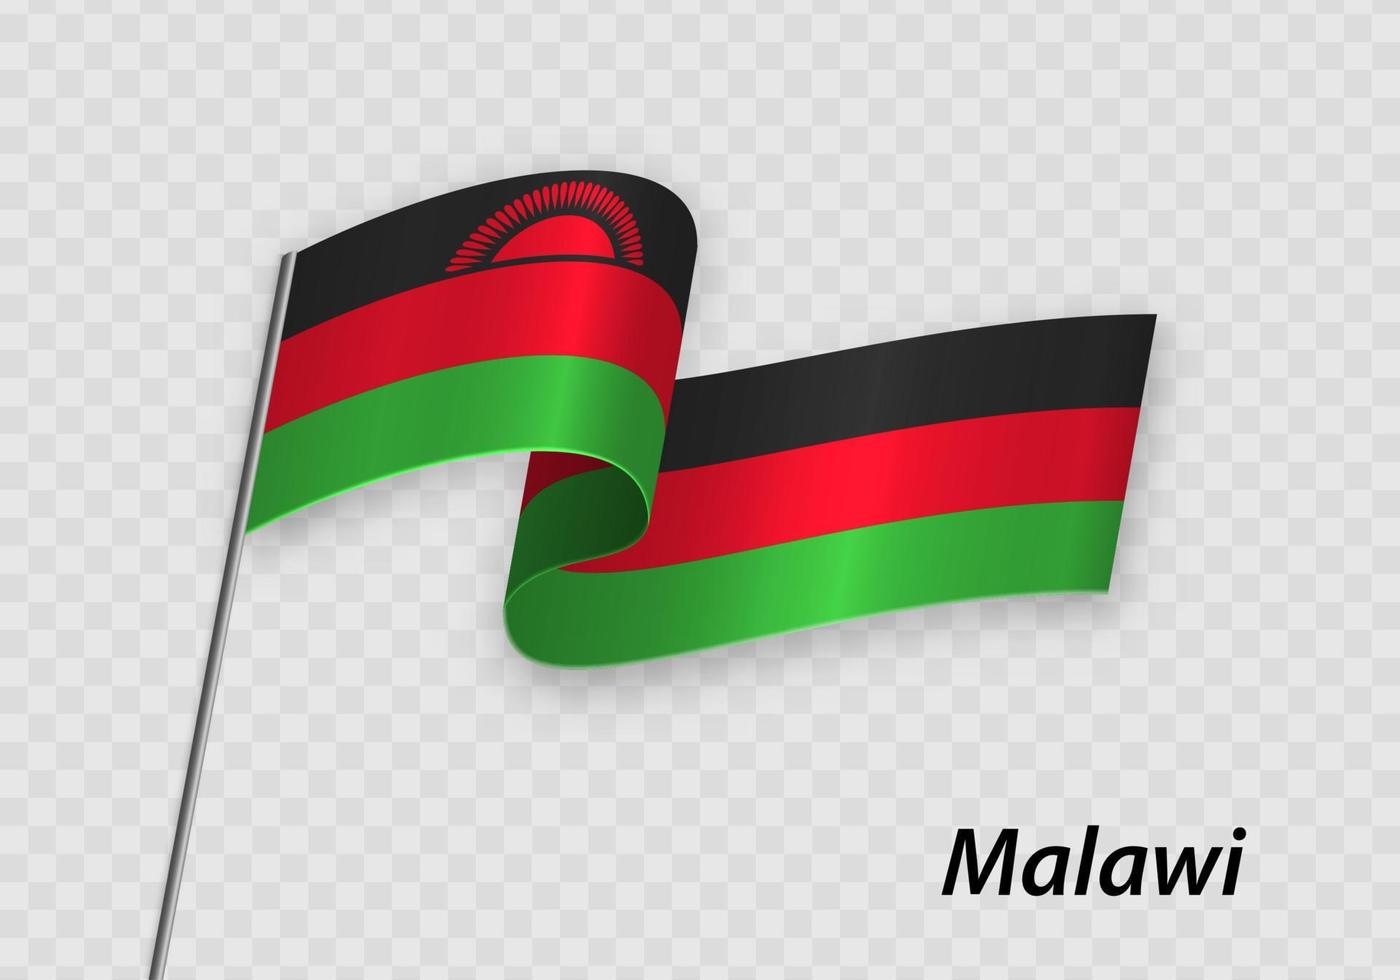 acenando a bandeira do malawi no mastro da bandeira. modelo para o dia da independência vetor